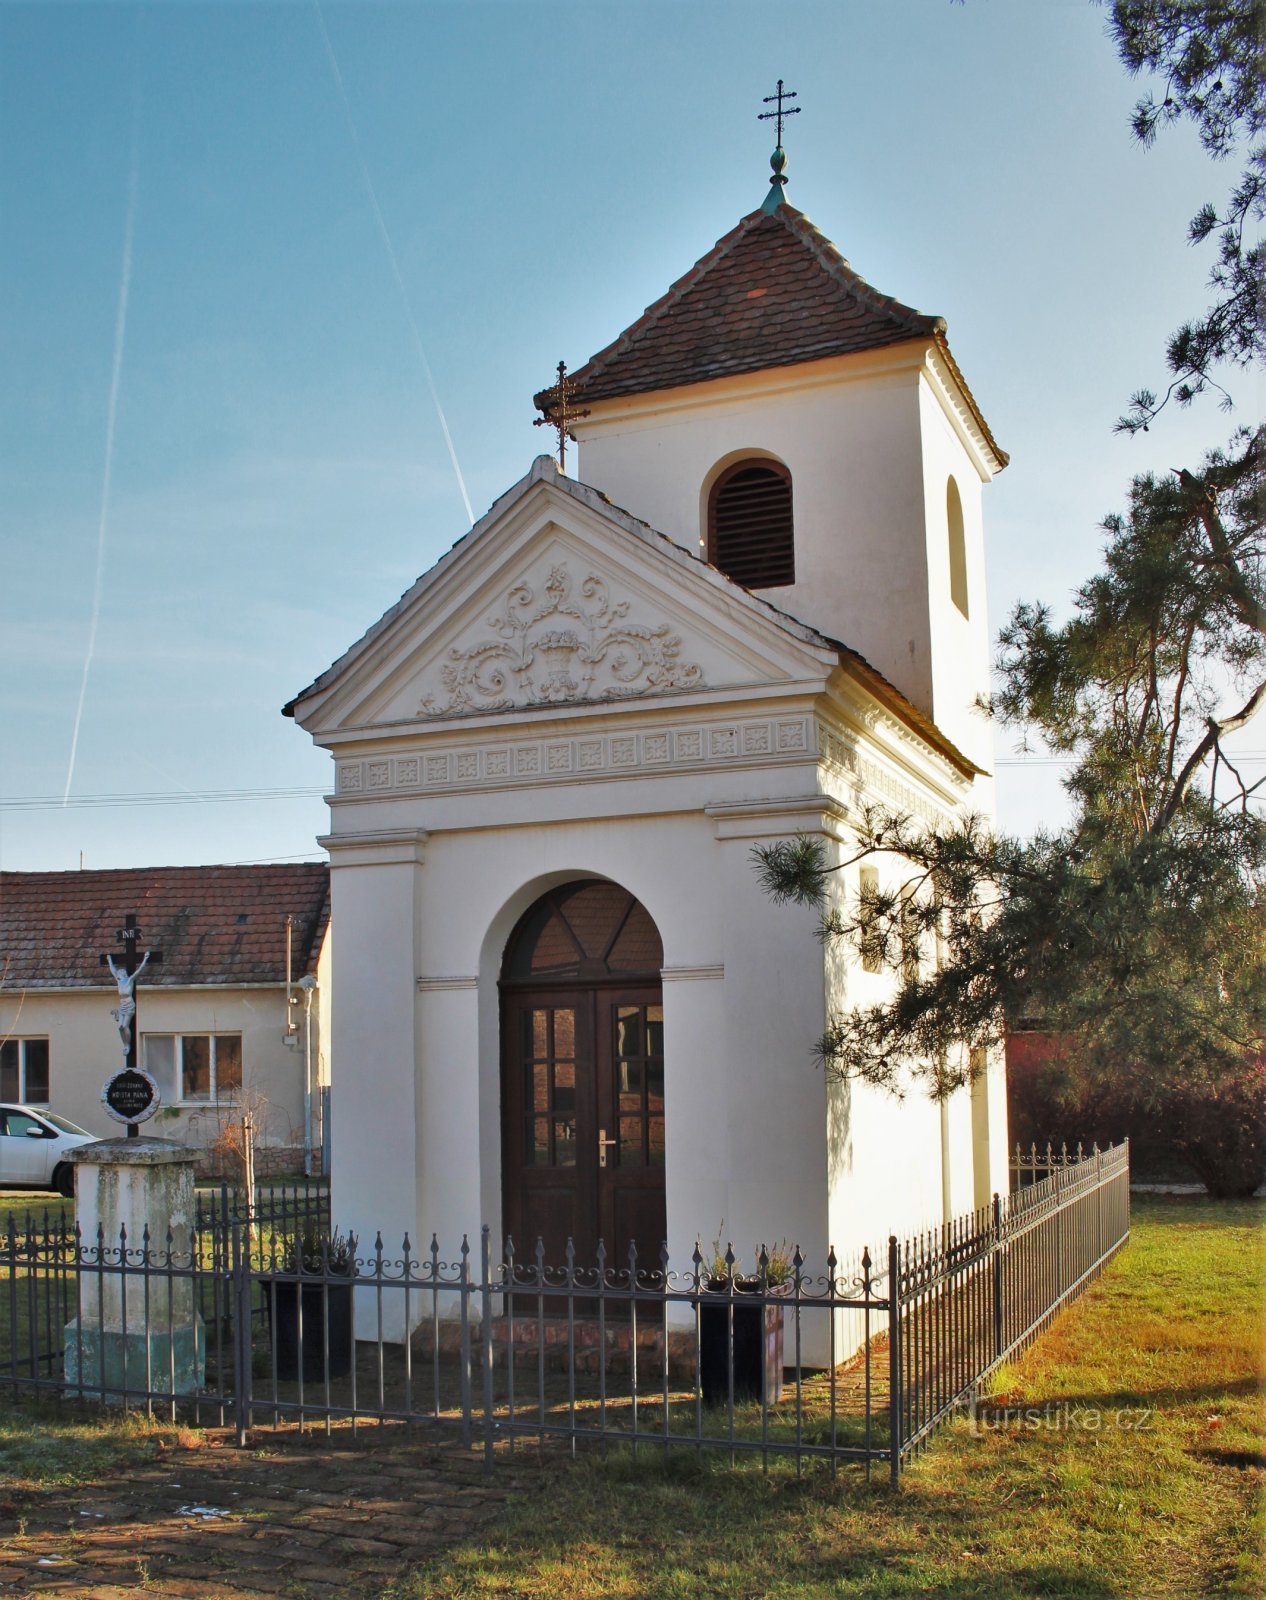 Ladná - chapel of St. Michael